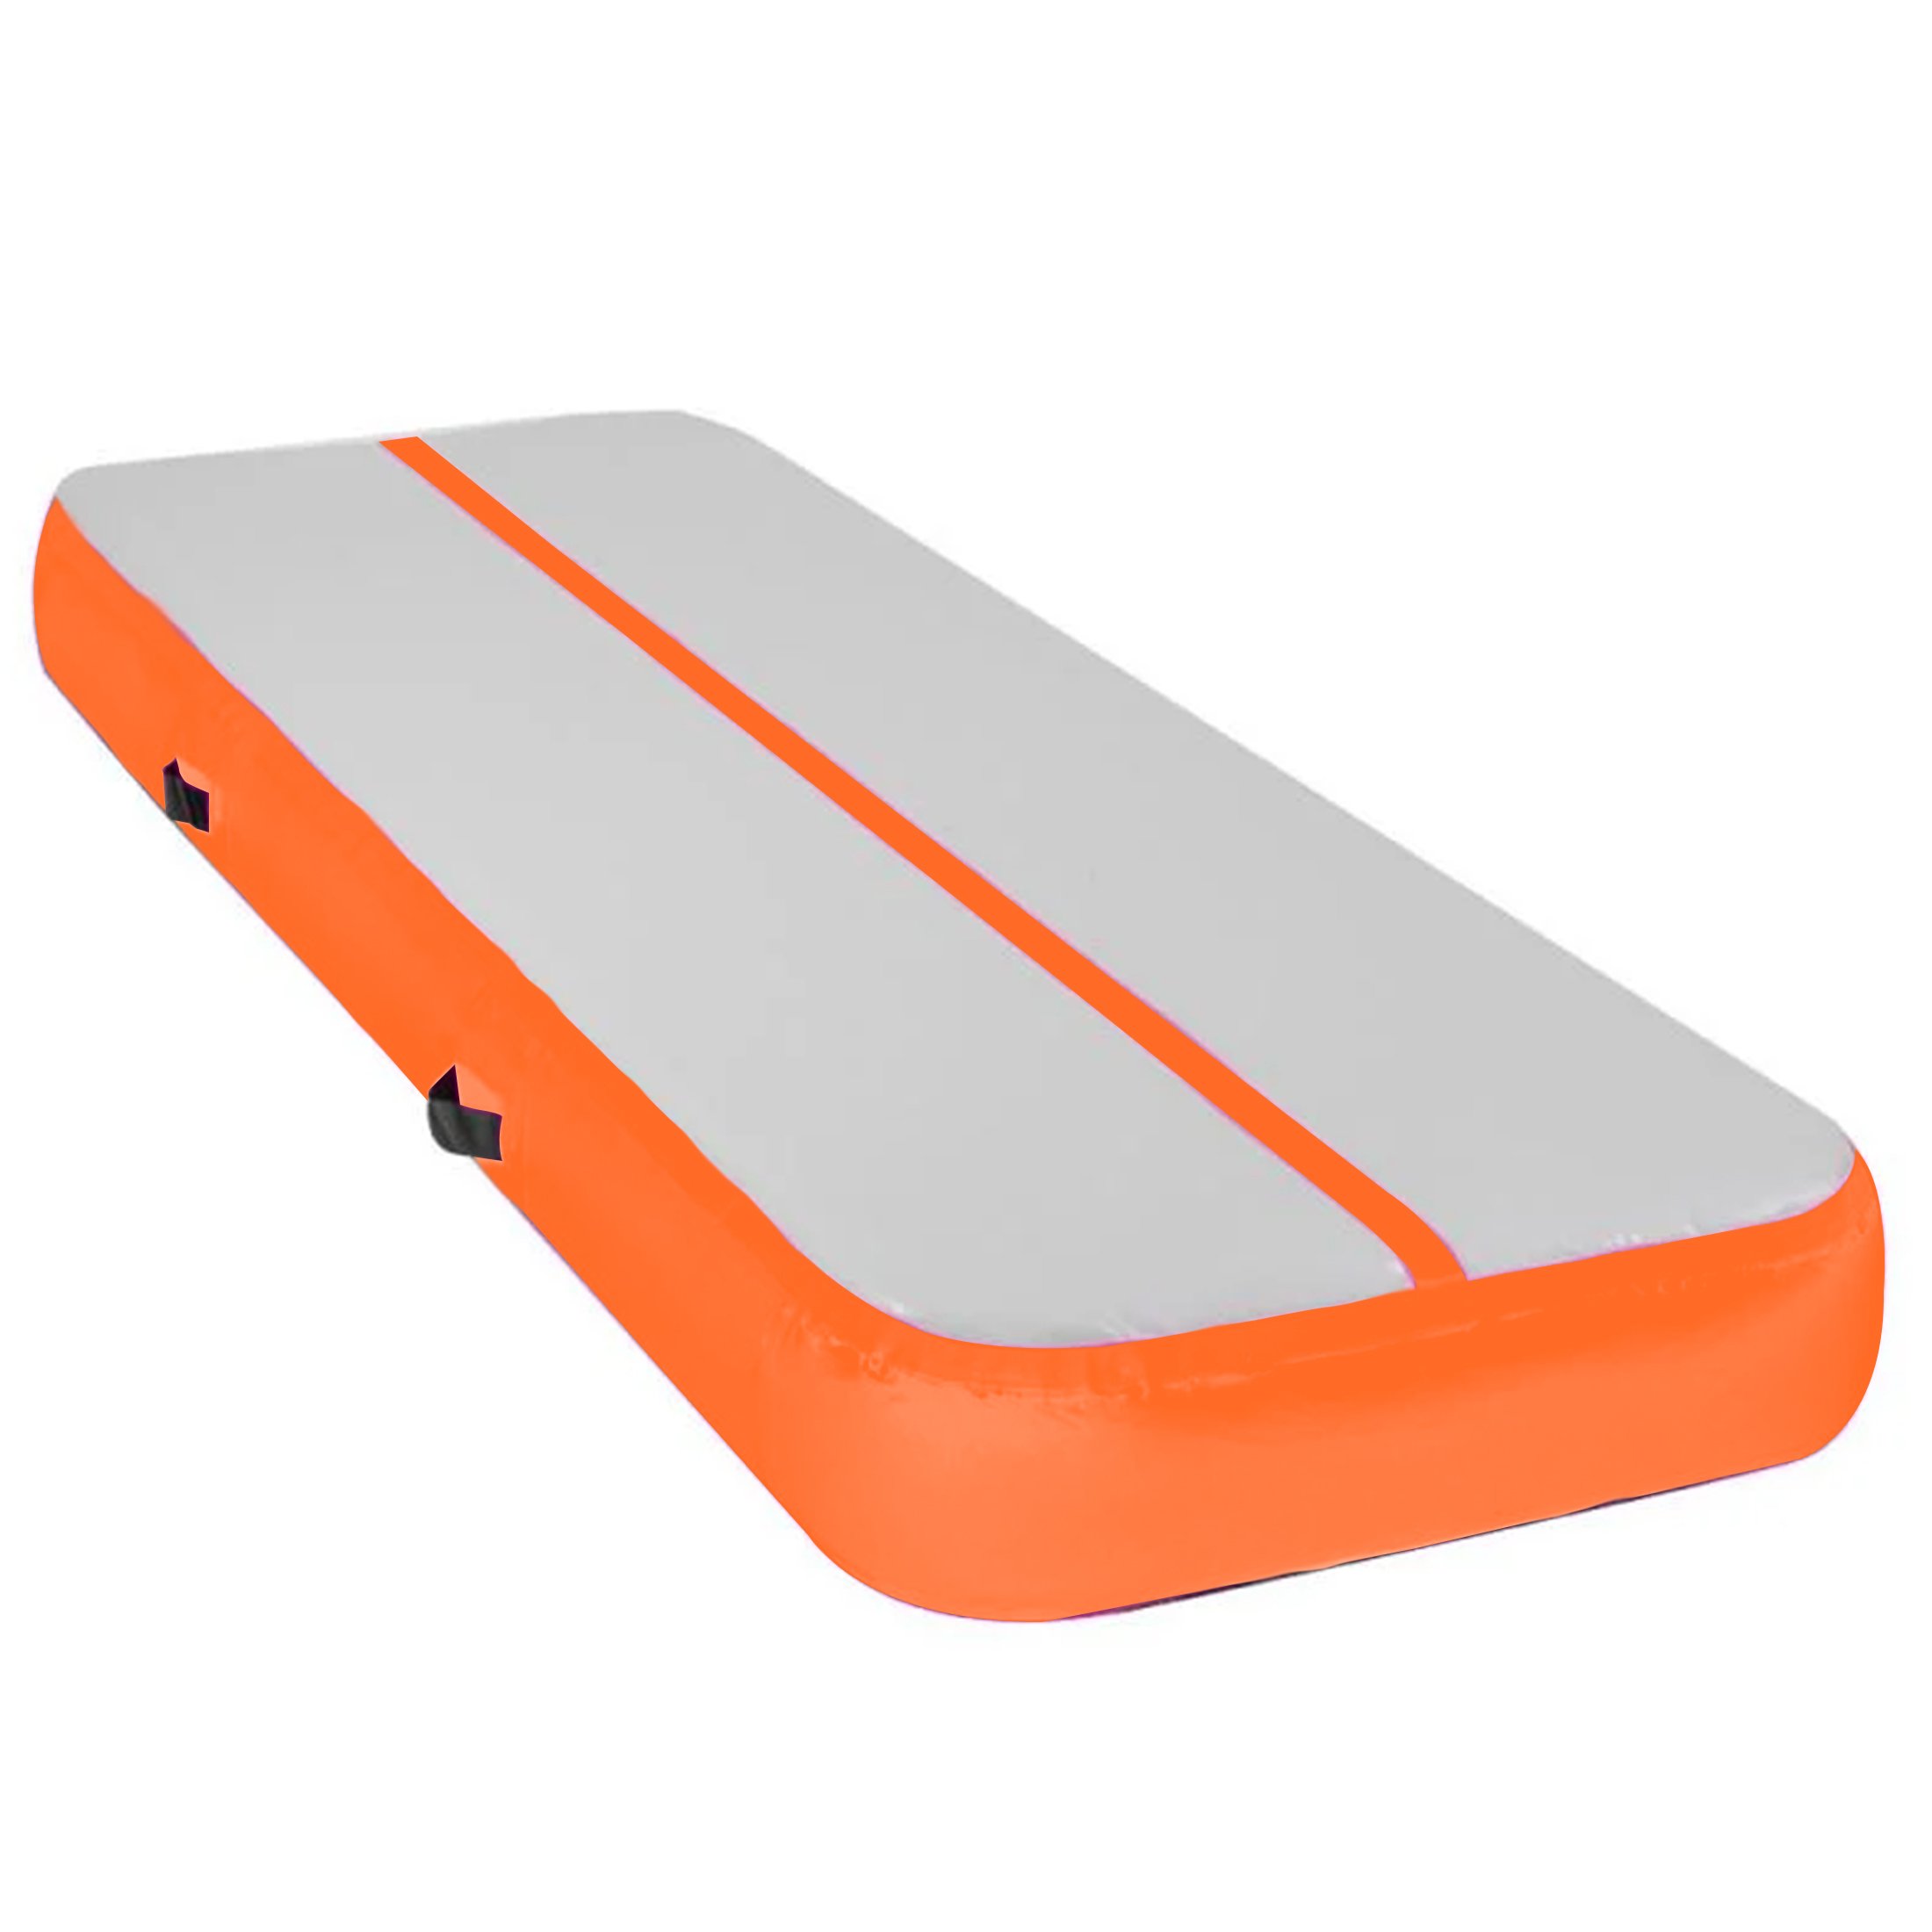 4m x 1m Air Track Inflatable Gymnastics Tumbling Mat - Orange 1